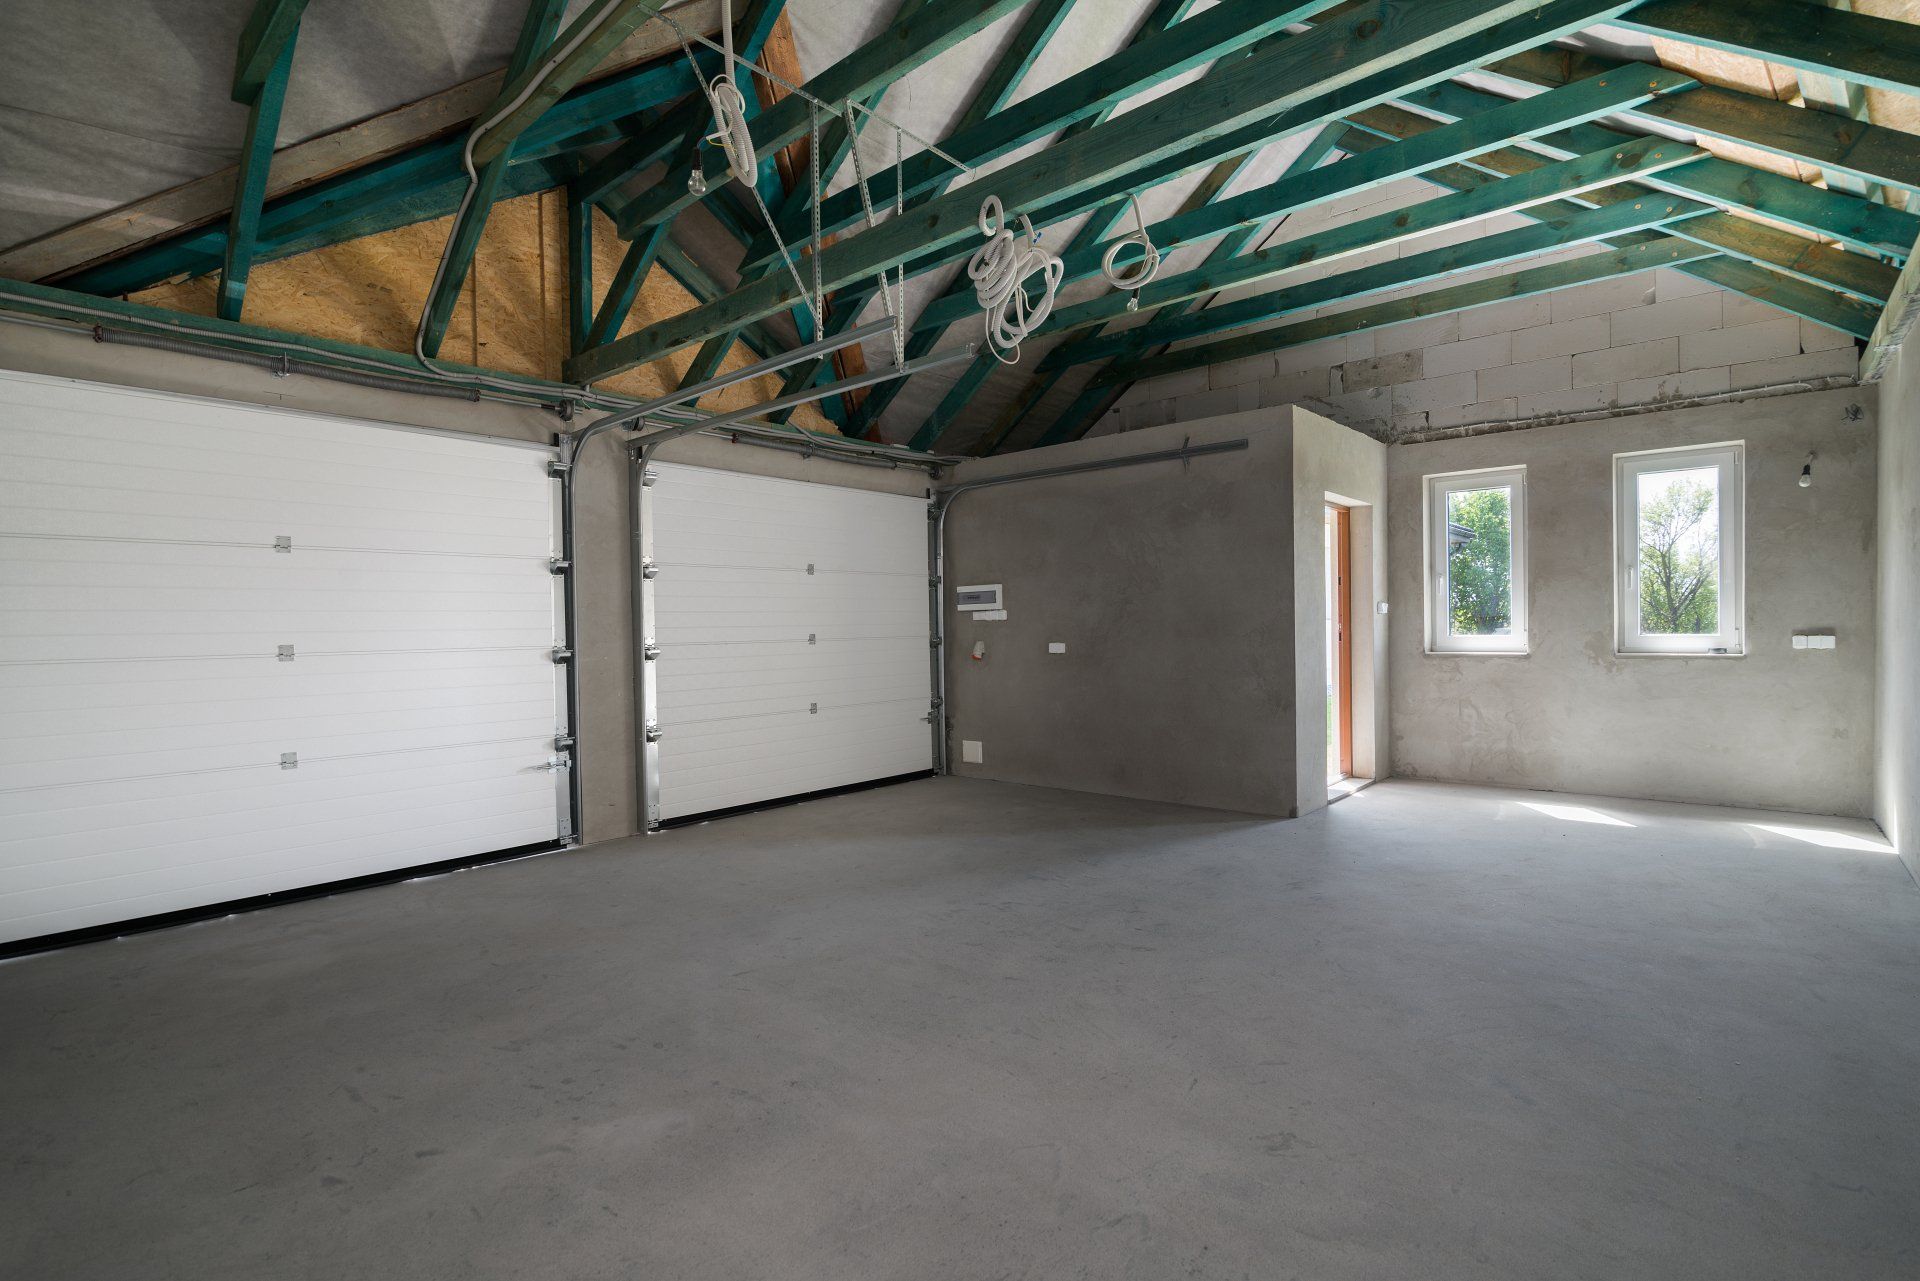 Epoxy coating flooring in garage